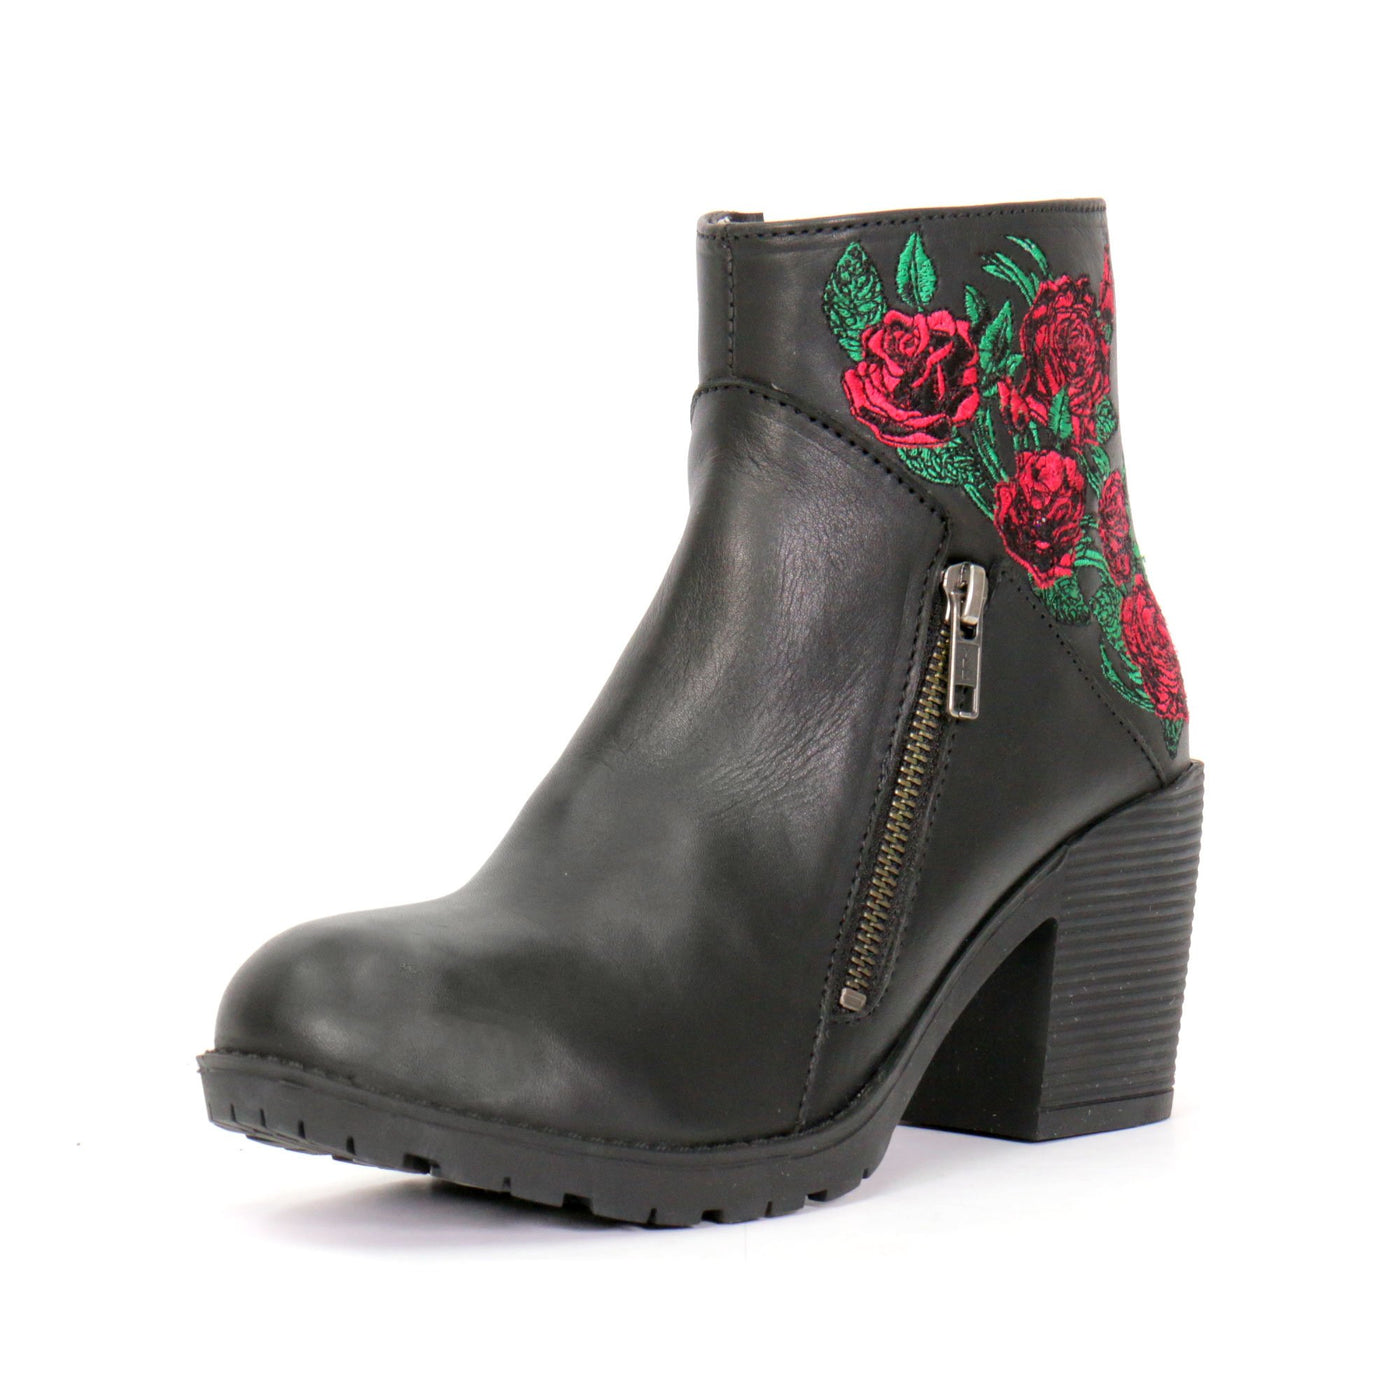 Hot Leathers Women's Wild Roses Zipper Boot